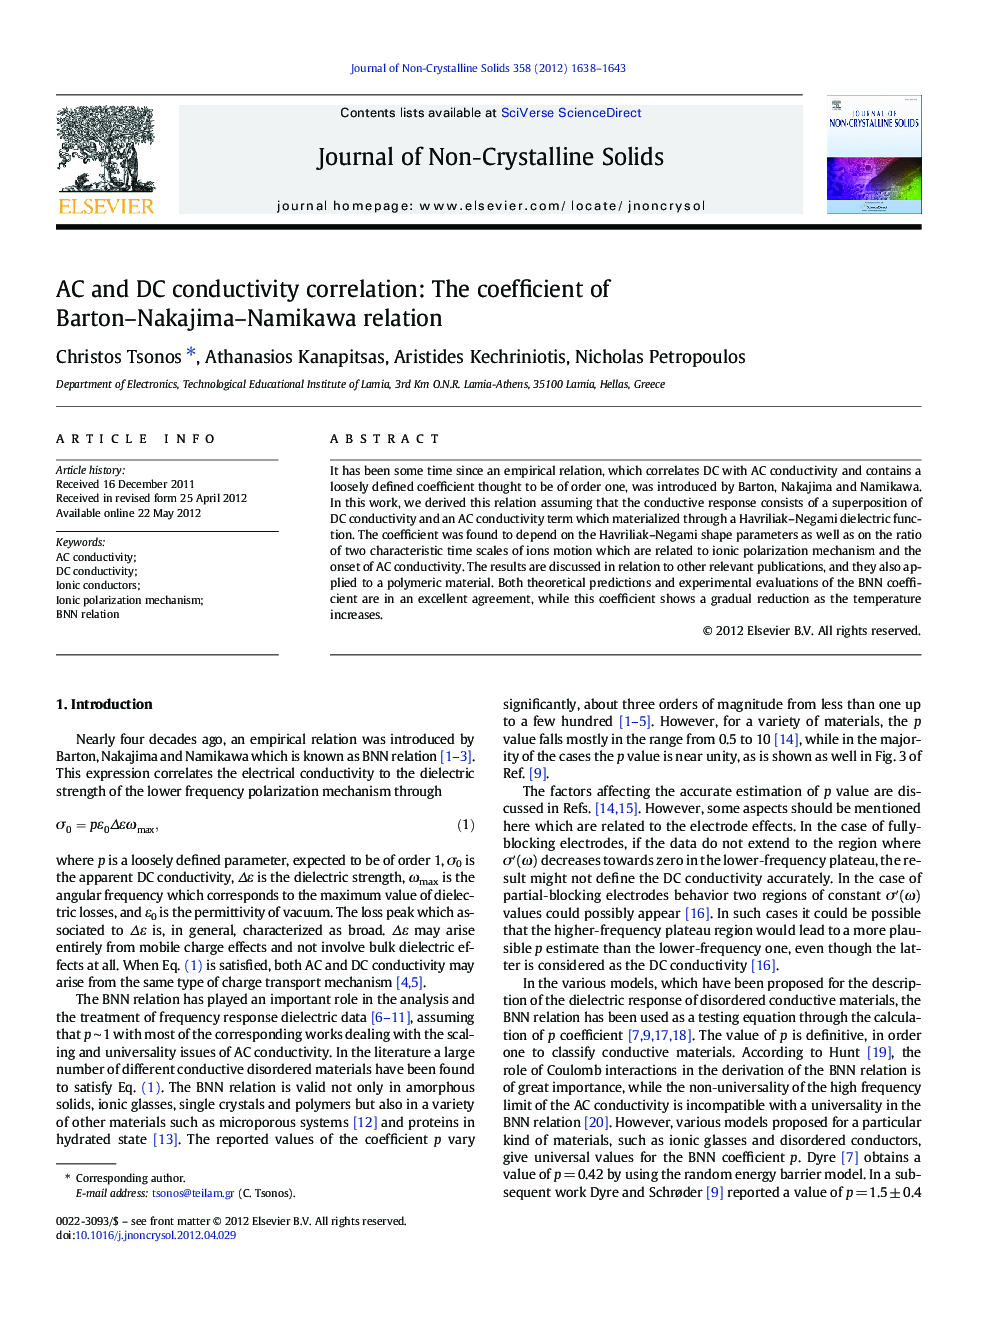 AC and DC conductivity correlation: The coefficient of Barton–Nakajima–Namikawa relation